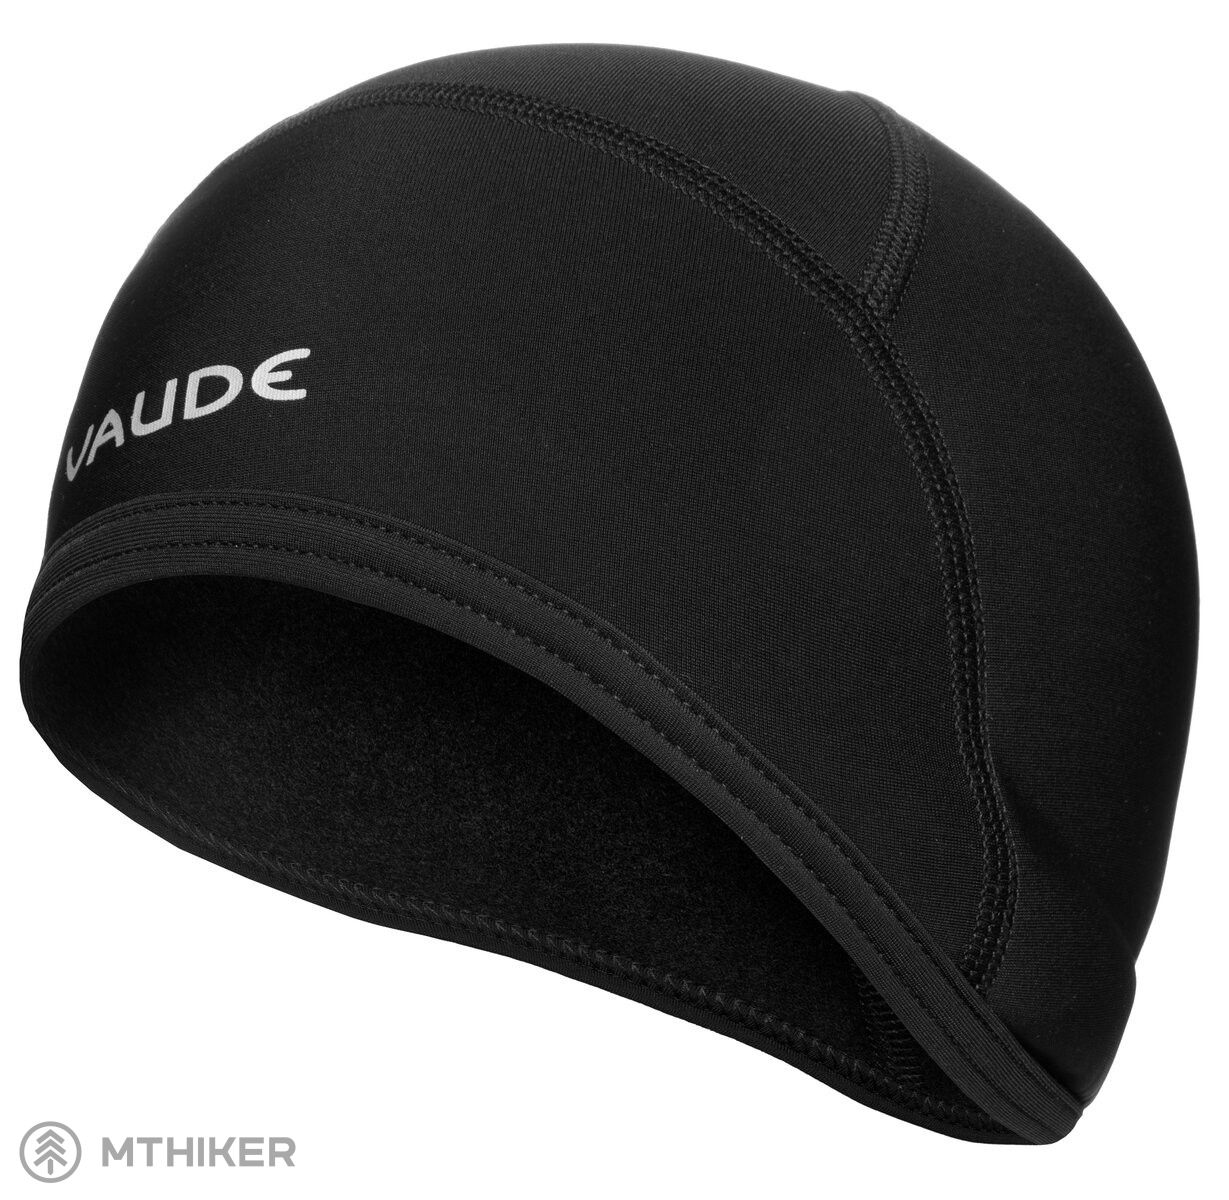 VAUDE Bike Warm cap, black/white